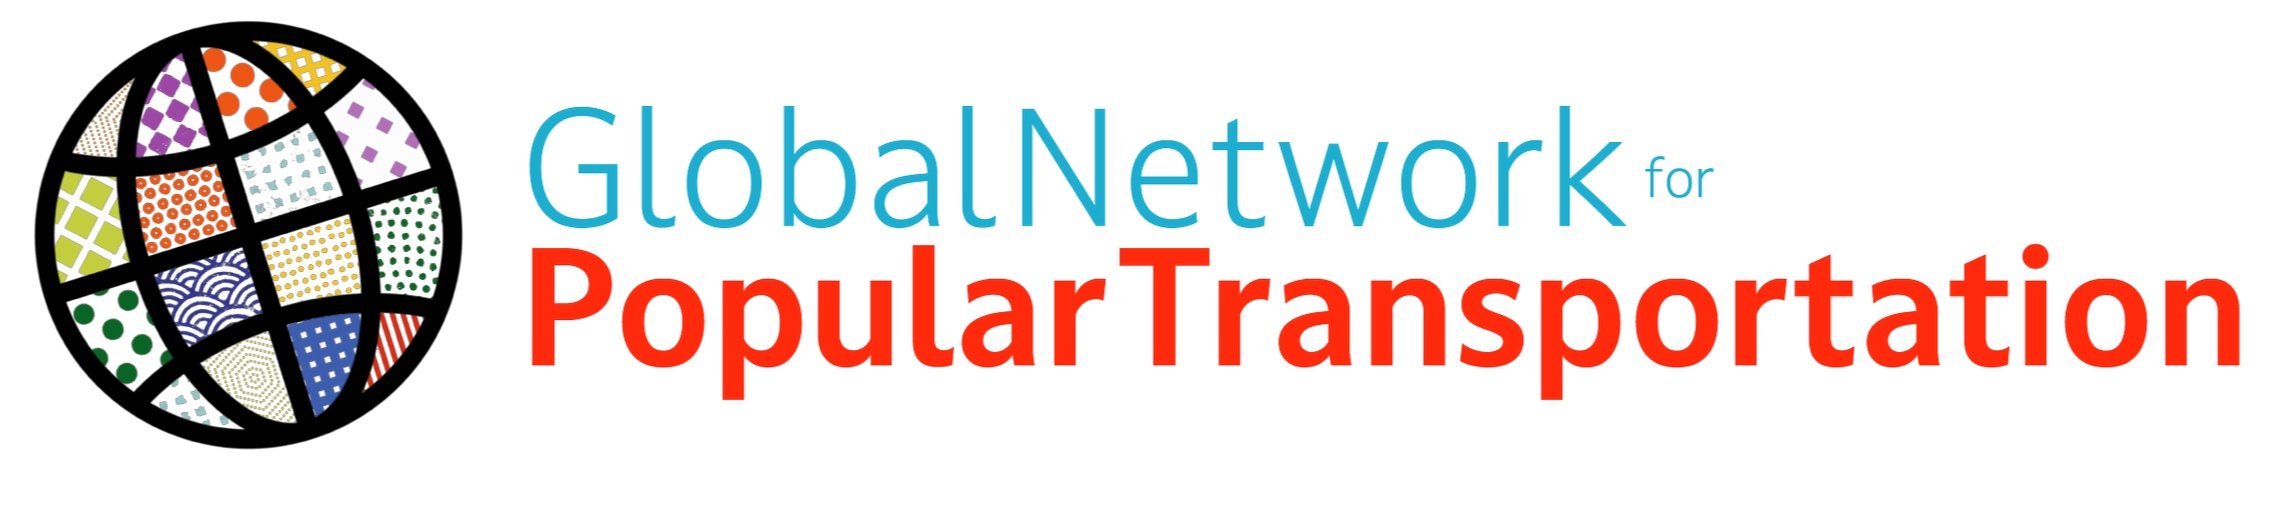 The Global Network for Popular Transportation